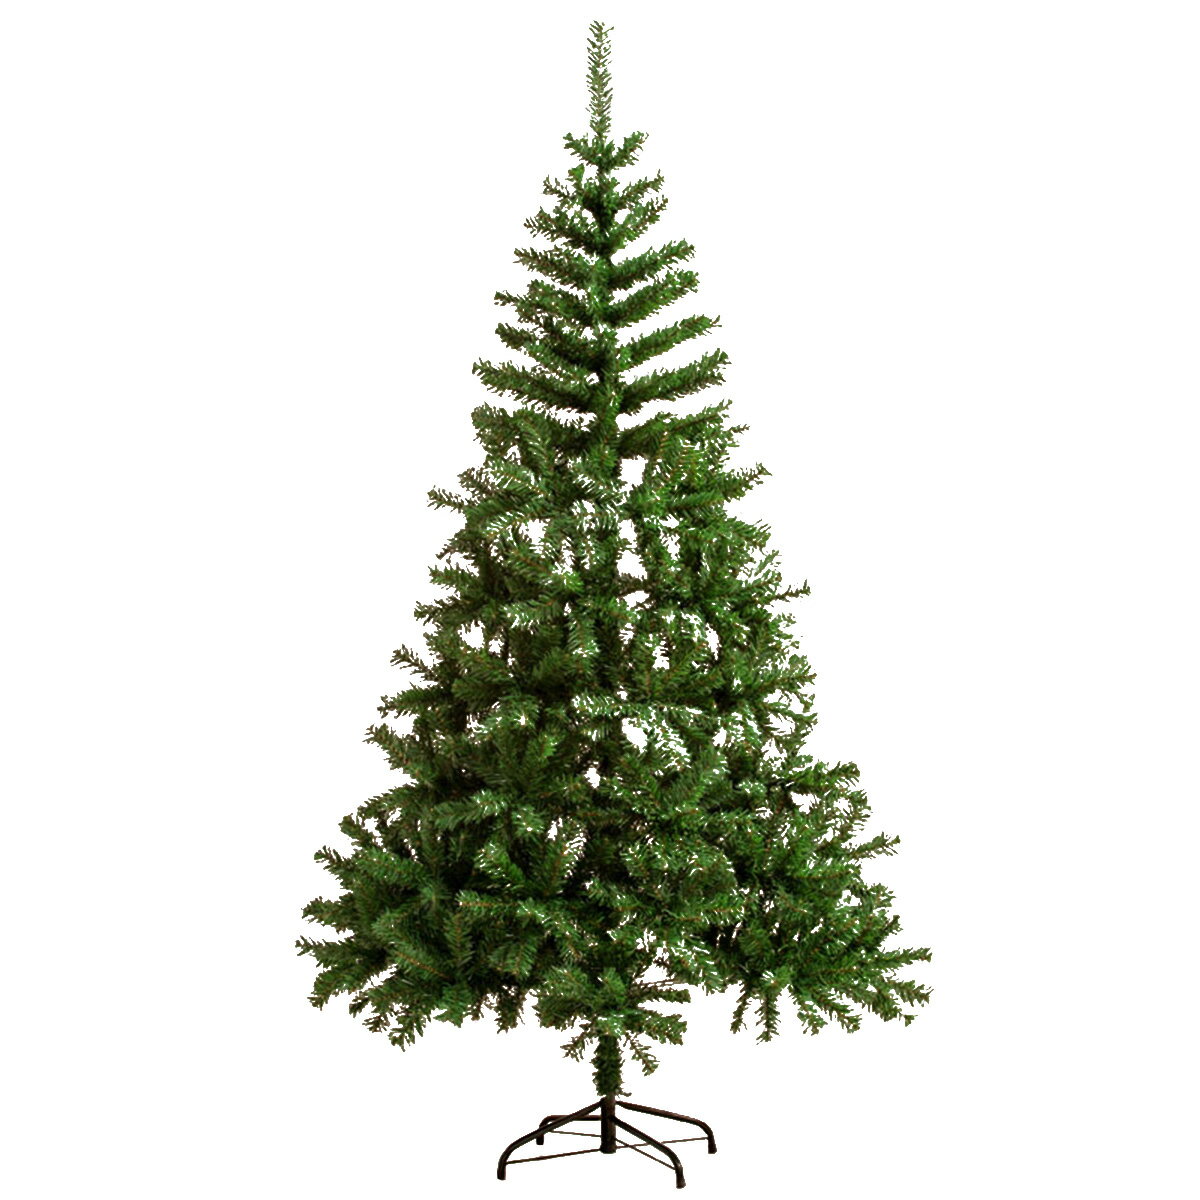  VeroMan クリスマスツリー グリーン もみの木 ヌードツリー 北欧 おしゃれ クリスマスデコレーション ツリー 単品 飾りなし